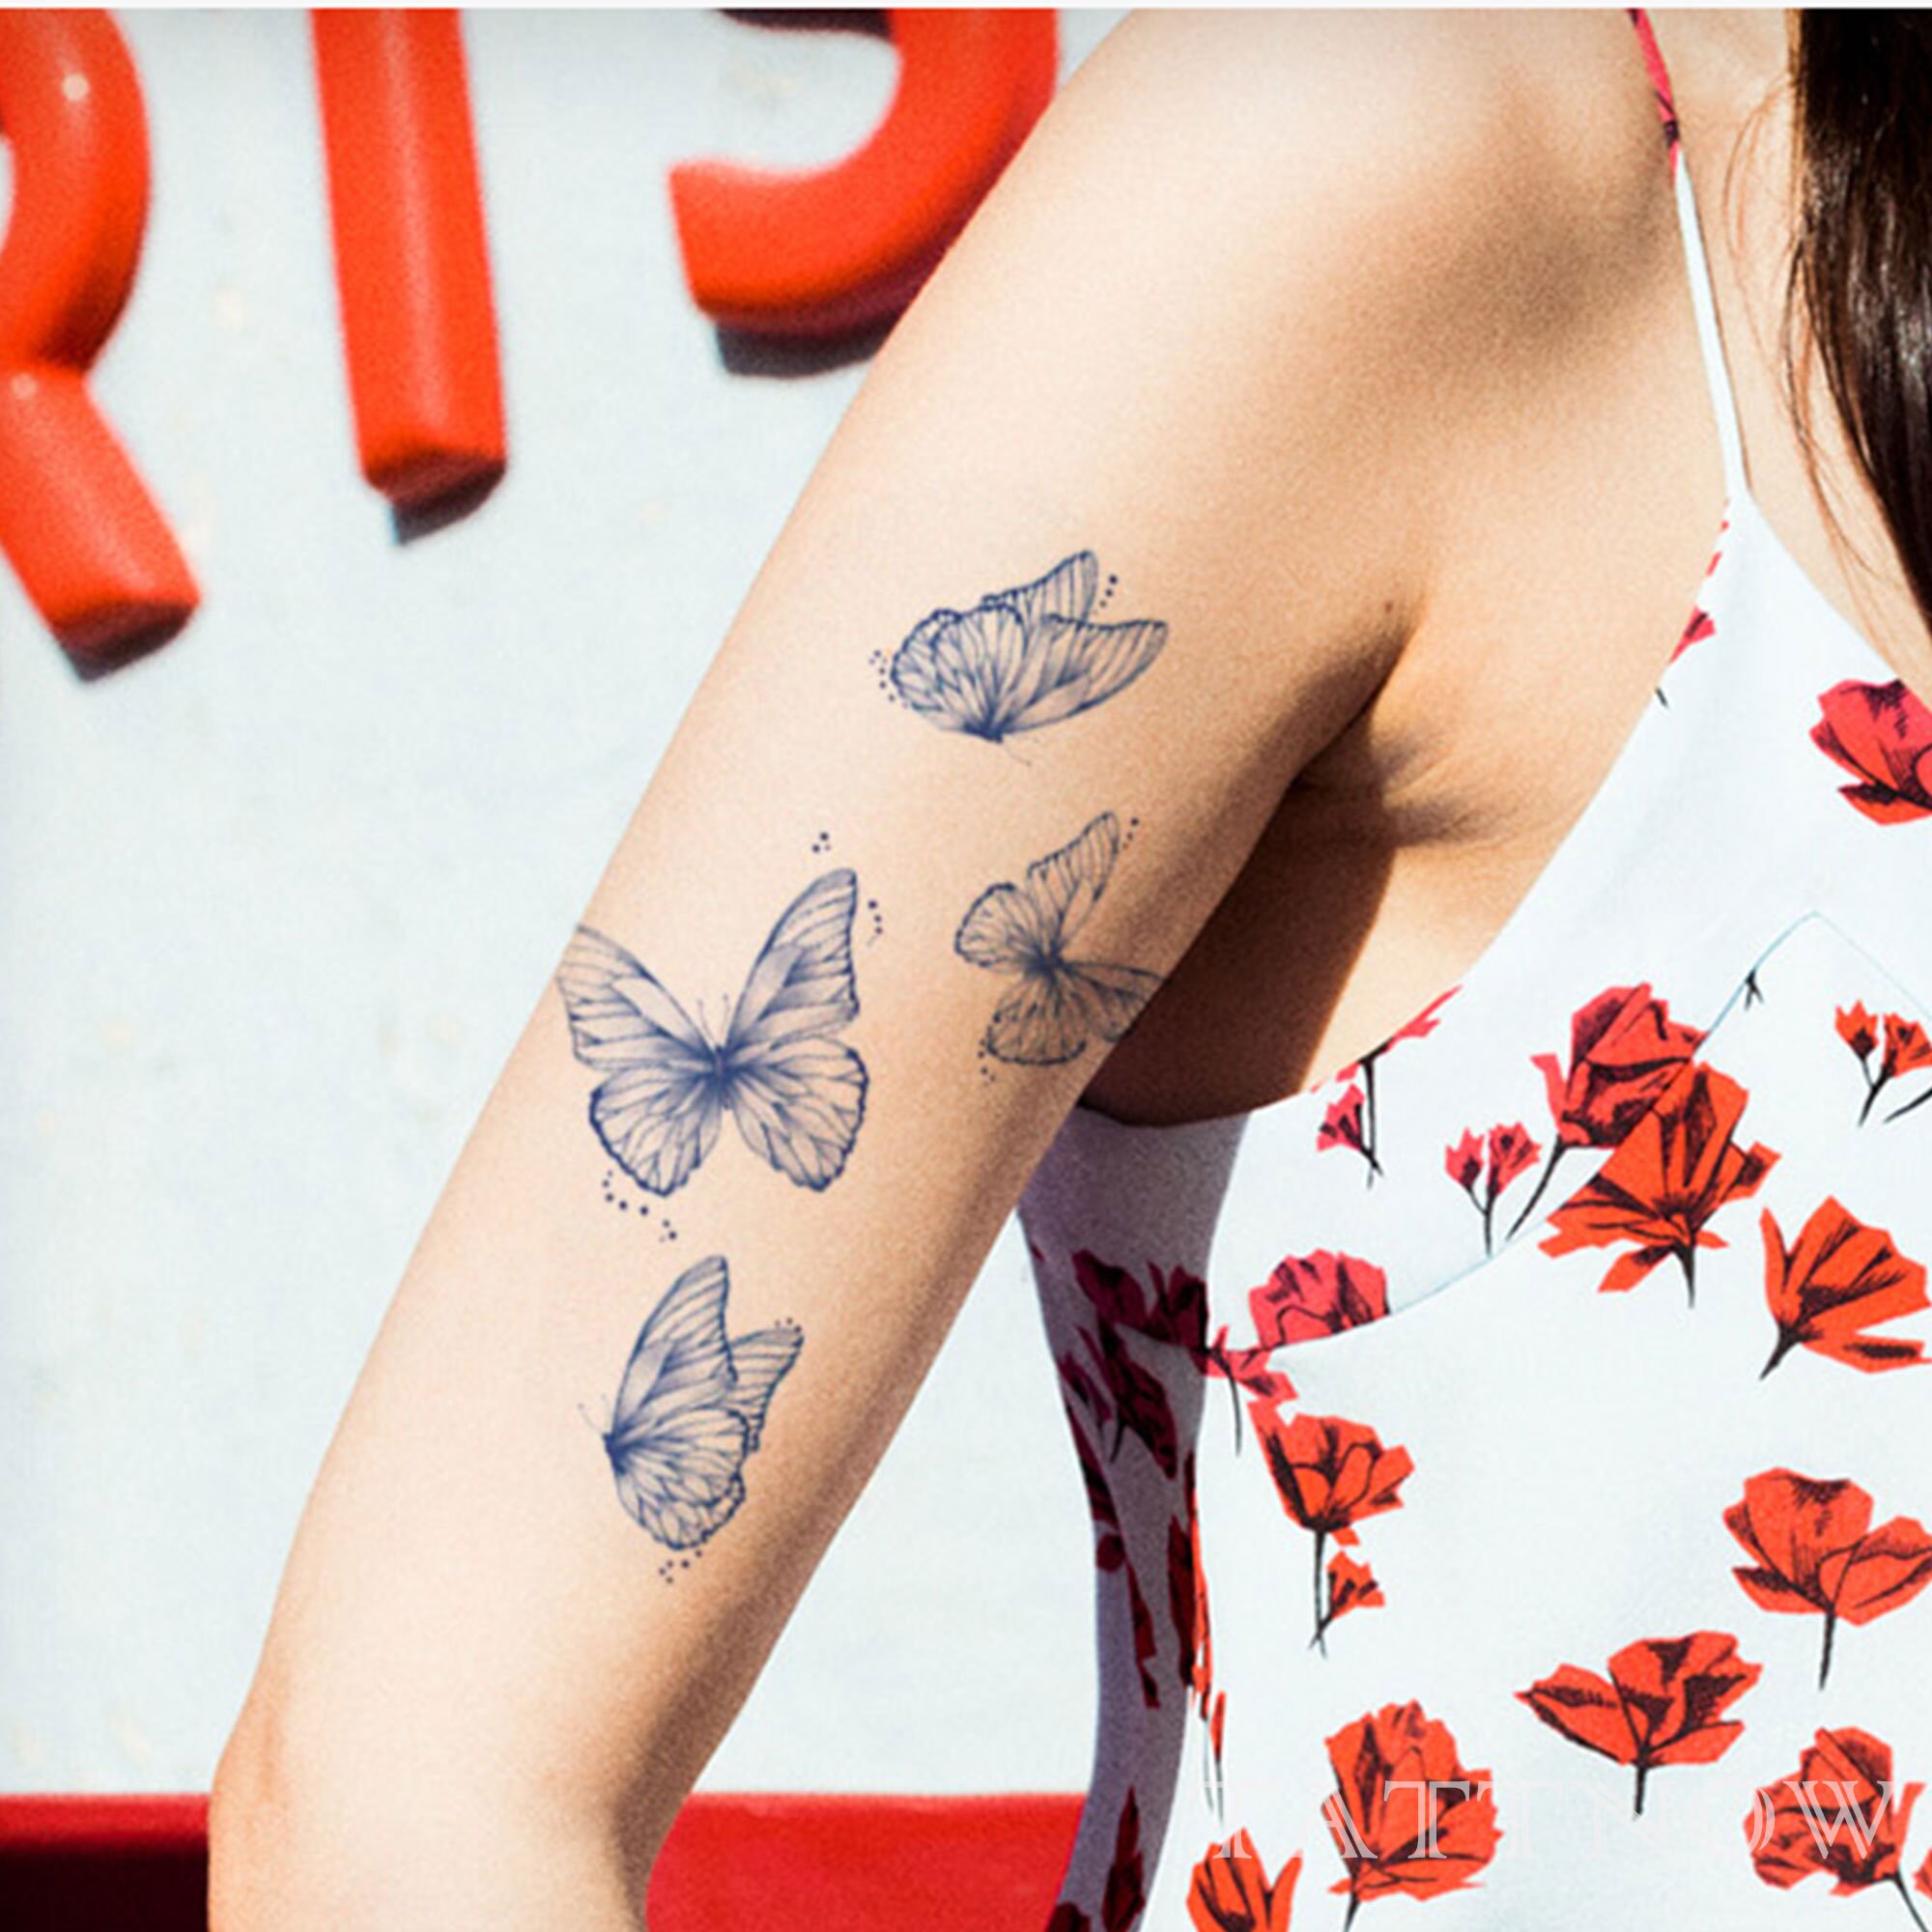 Tattoo Ideas For Forearms  Butterfly DesignButterfly Tattoo Ideas